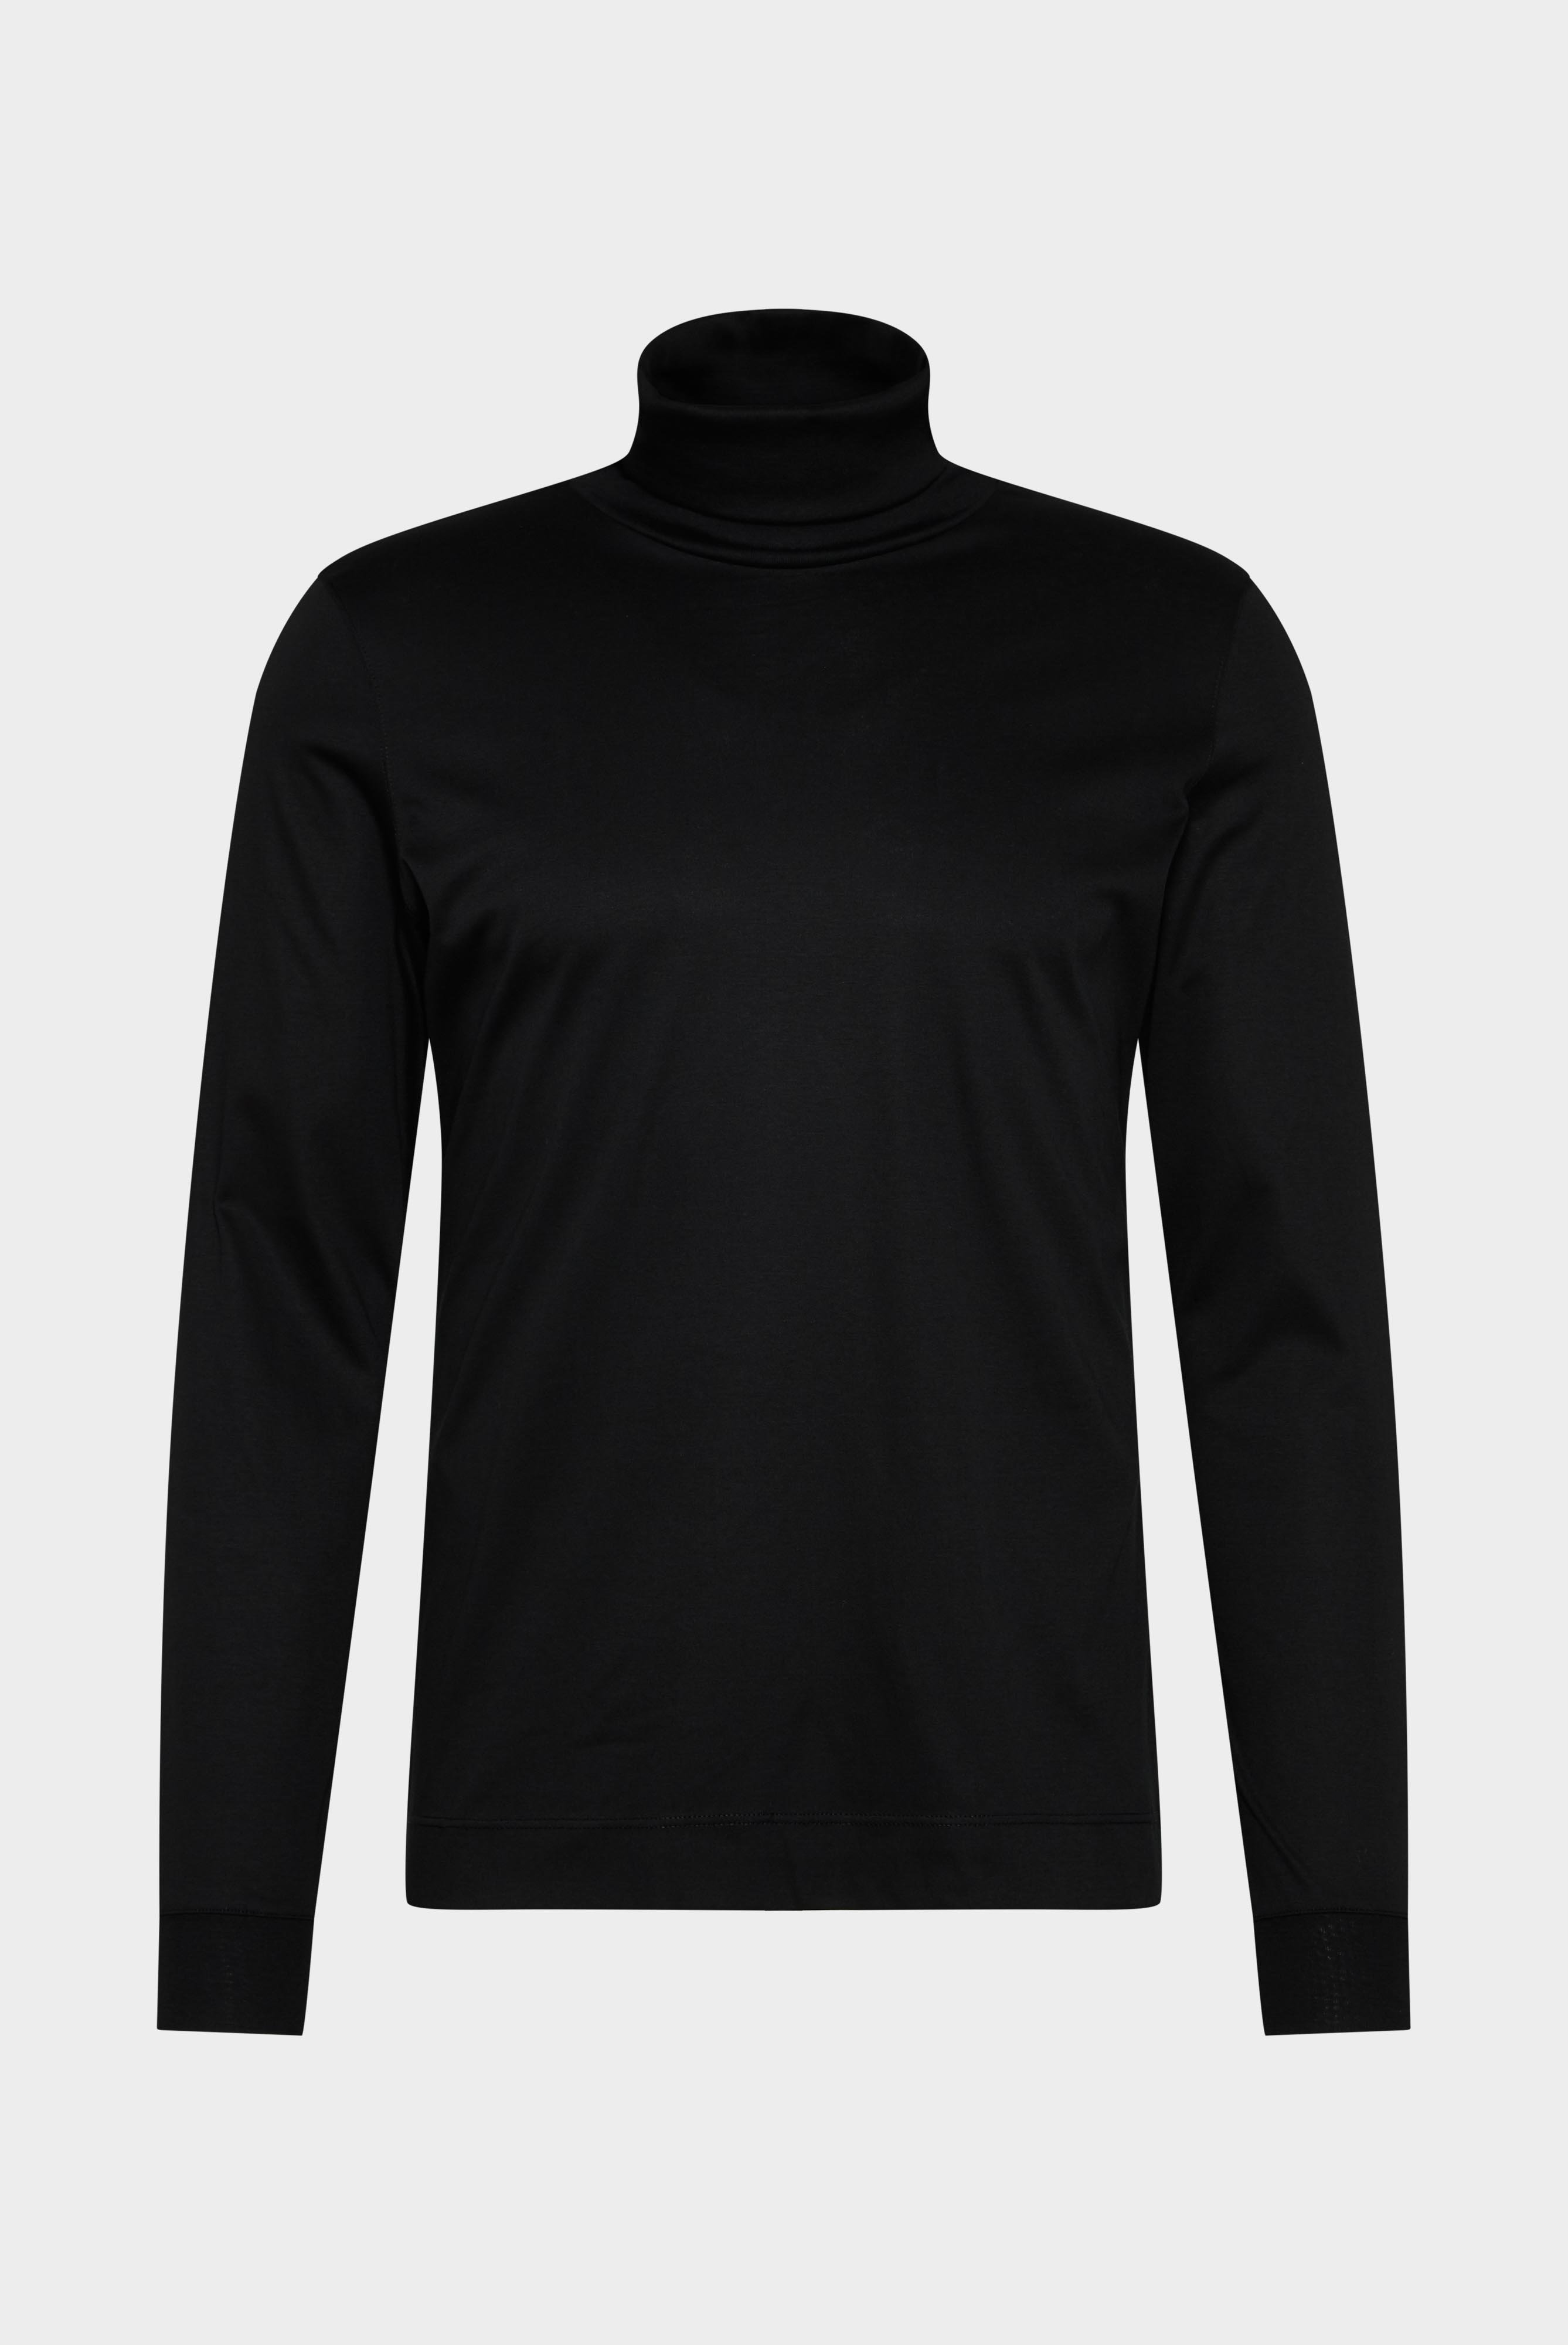 T-Shirts+Swiss Cotton Jersey Turtleneck Shirt+20.1719.UX.180031.099.XL